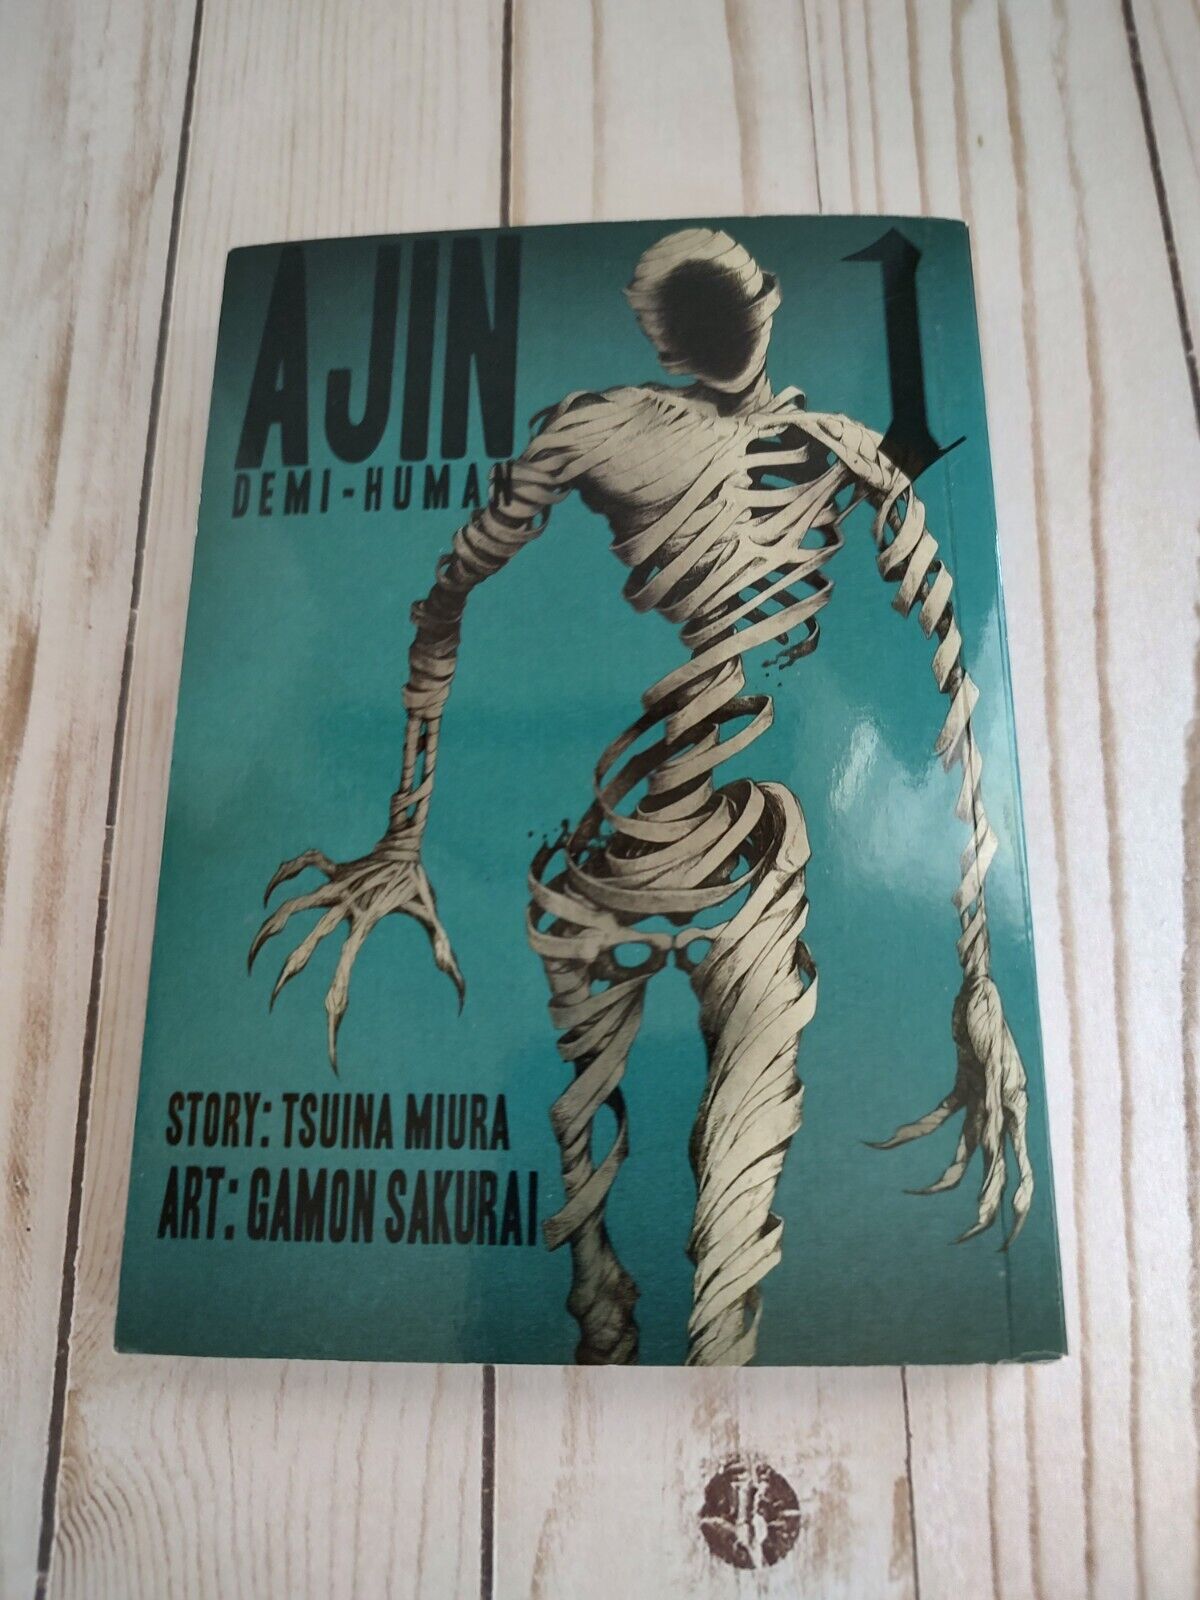 Ajin: Demi-Human #1 (vertical, English, Softcover, Tsuina Miura, Gamon Sakurai)